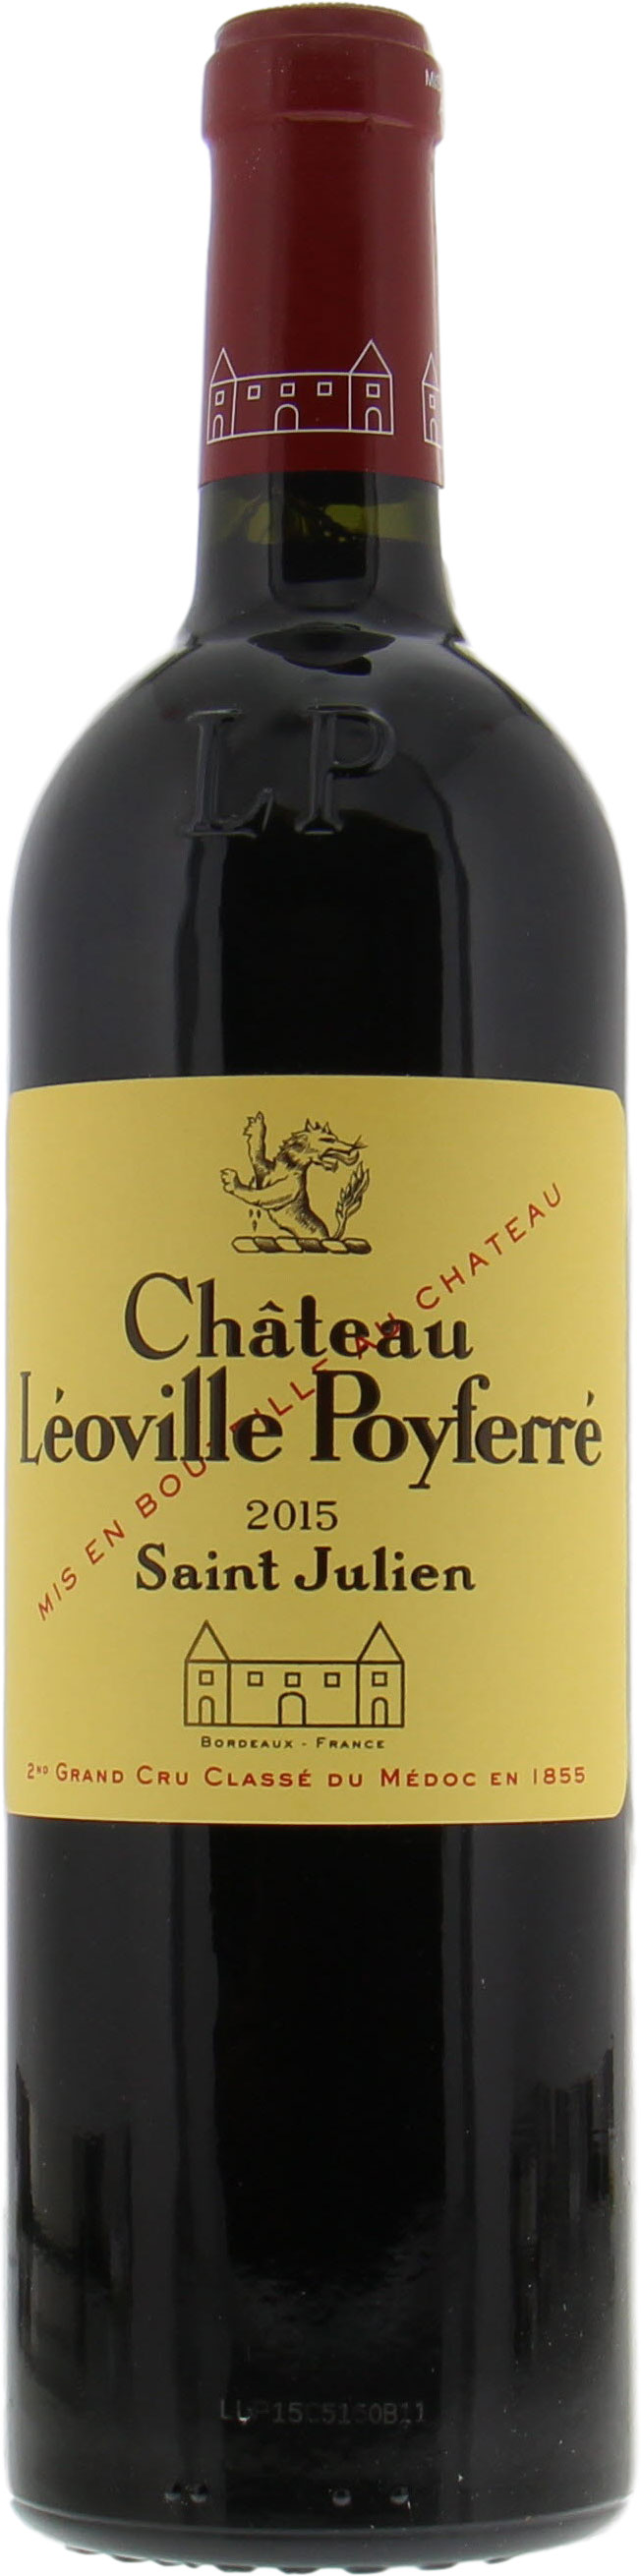 Chateau Leoville Poyferre - Chateau Leoville Poyferre 2015 Perfect